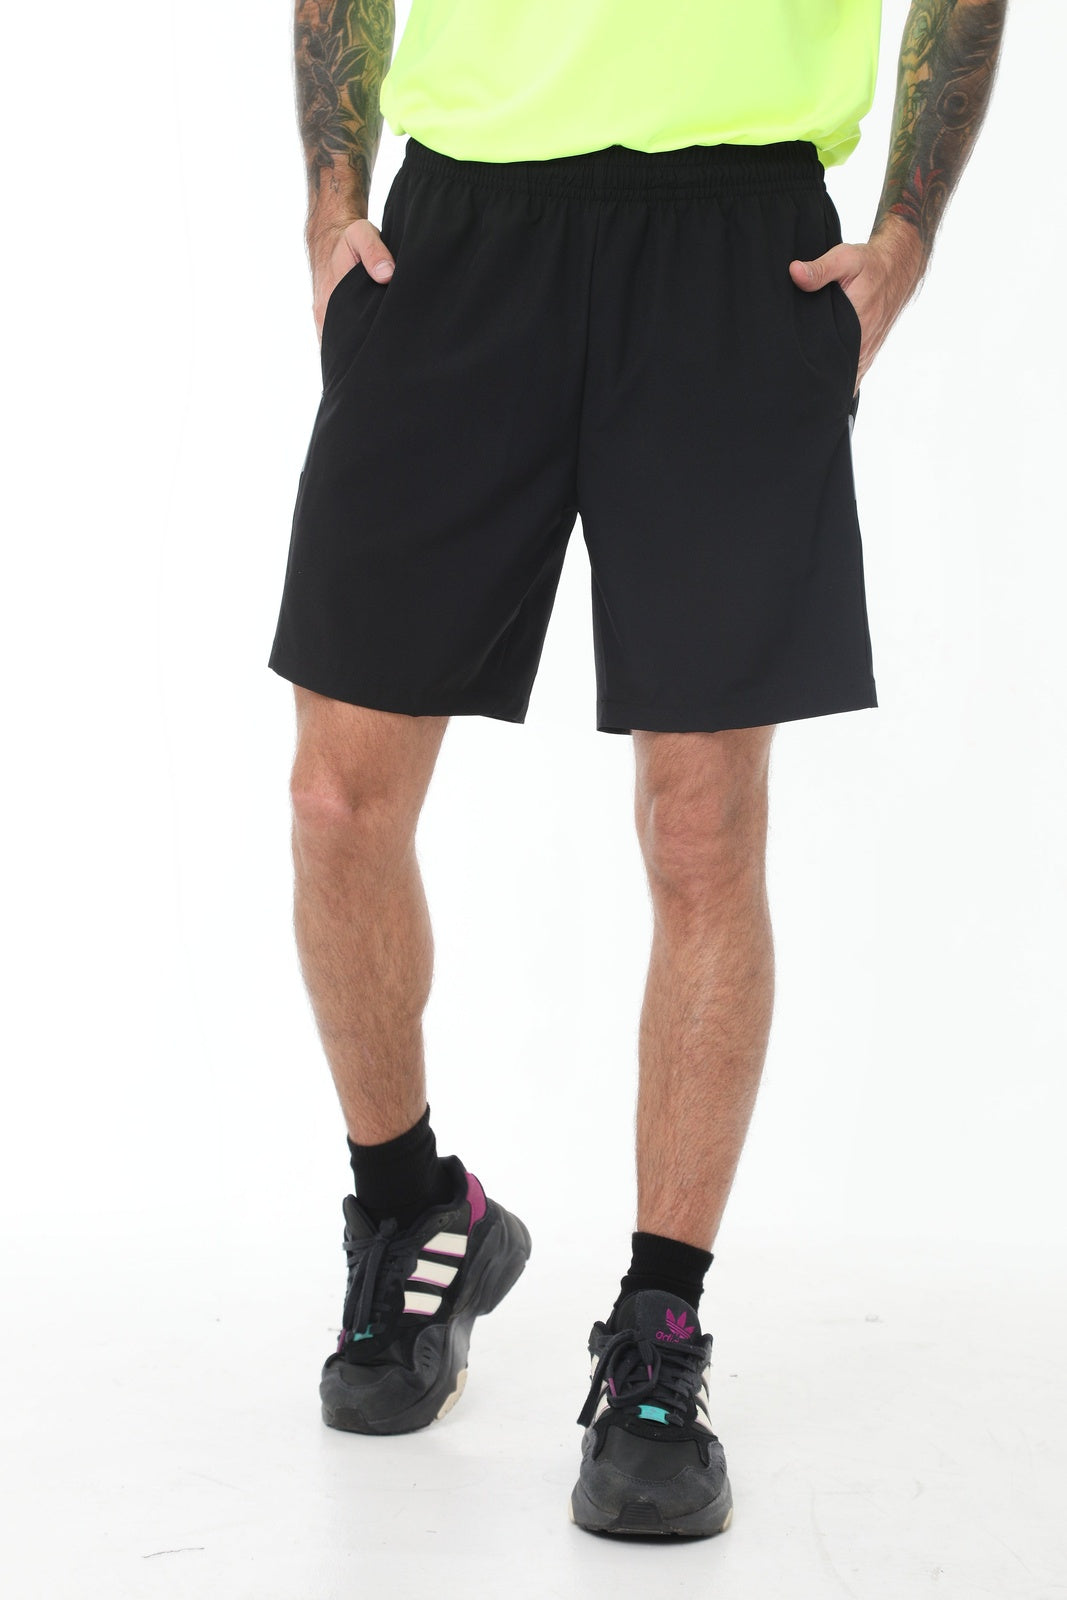 Pantaloneta deportiva negra con bloques laterales y ciclista interno para hombre